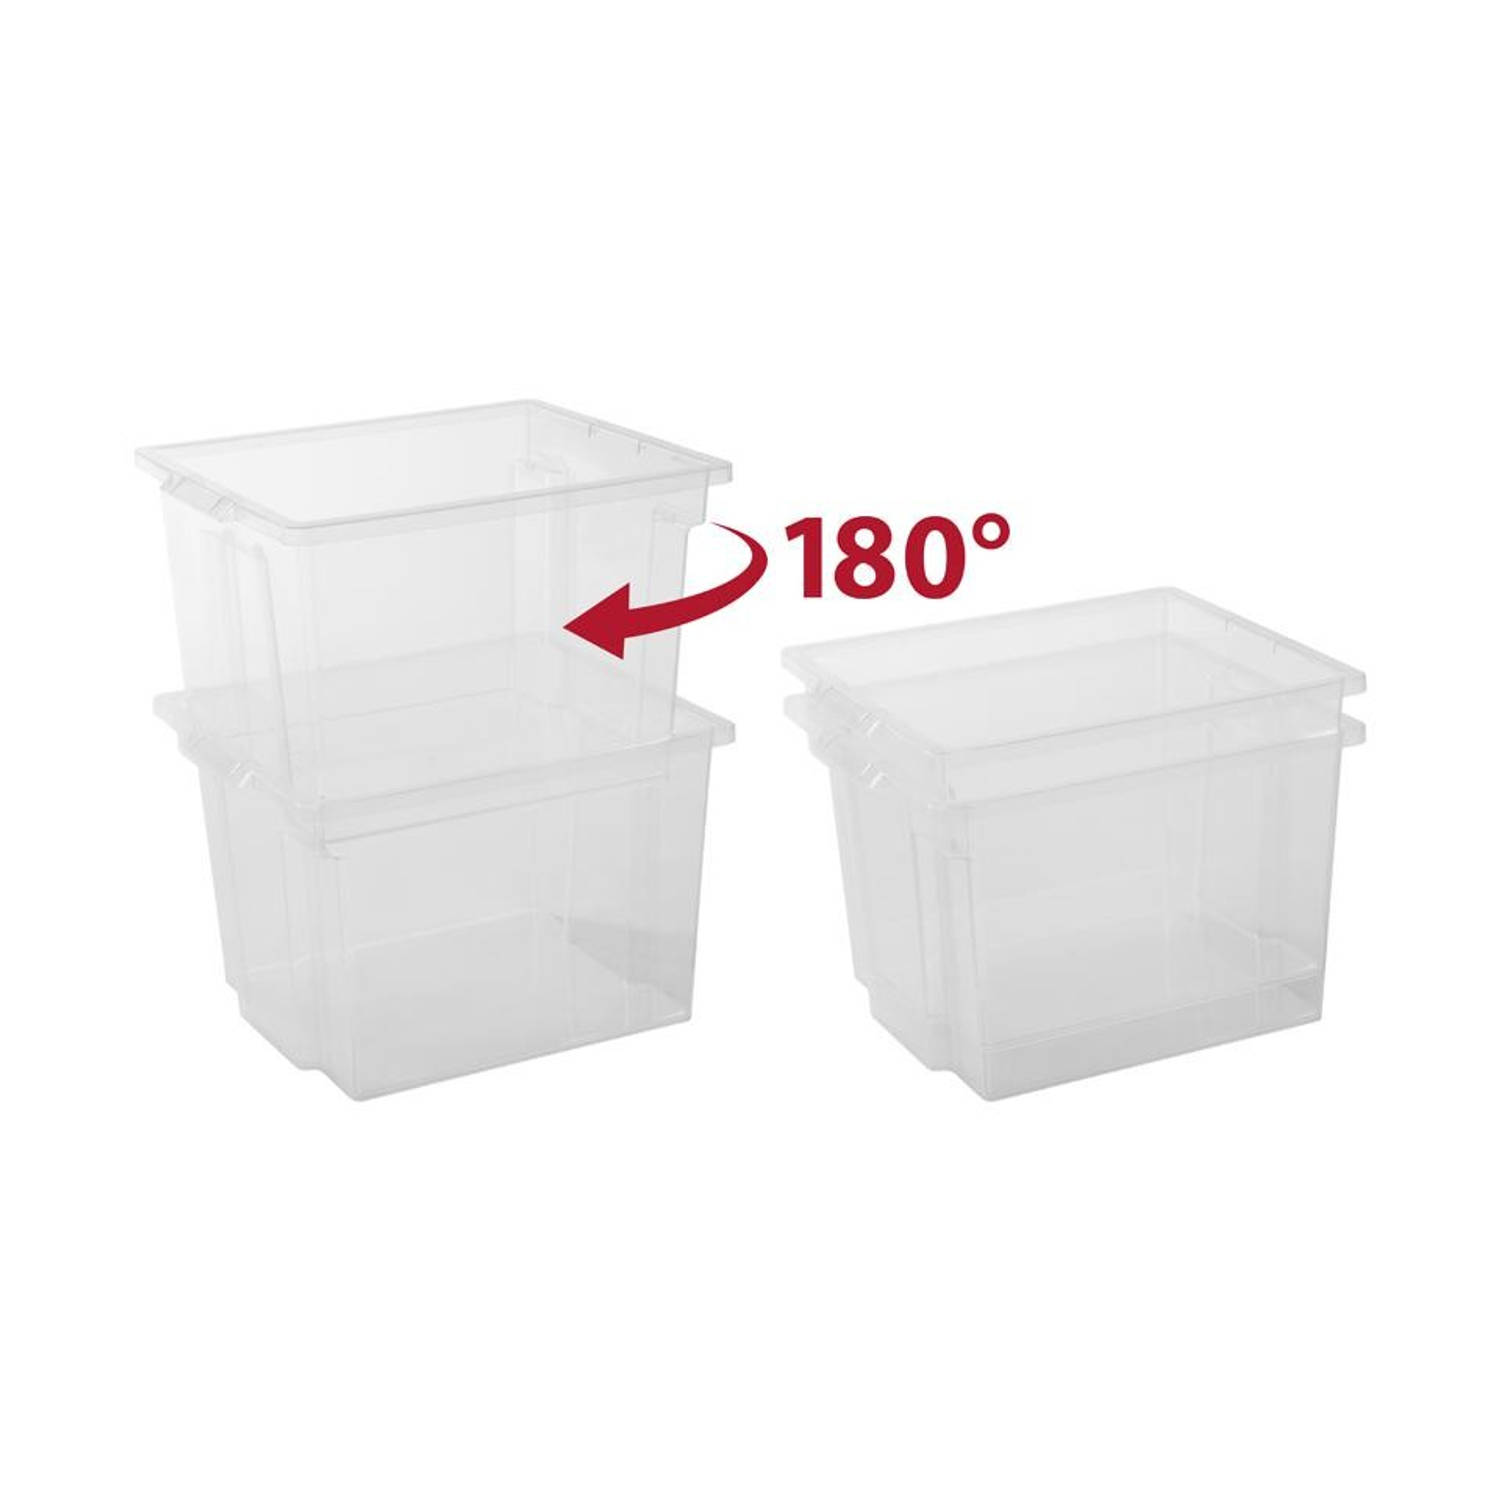 Menselijk ras ethisch Onvoorziene omstandigheden Iris Storage Box opbergbox - 30 liter - transparant - set van 6 | Blokker